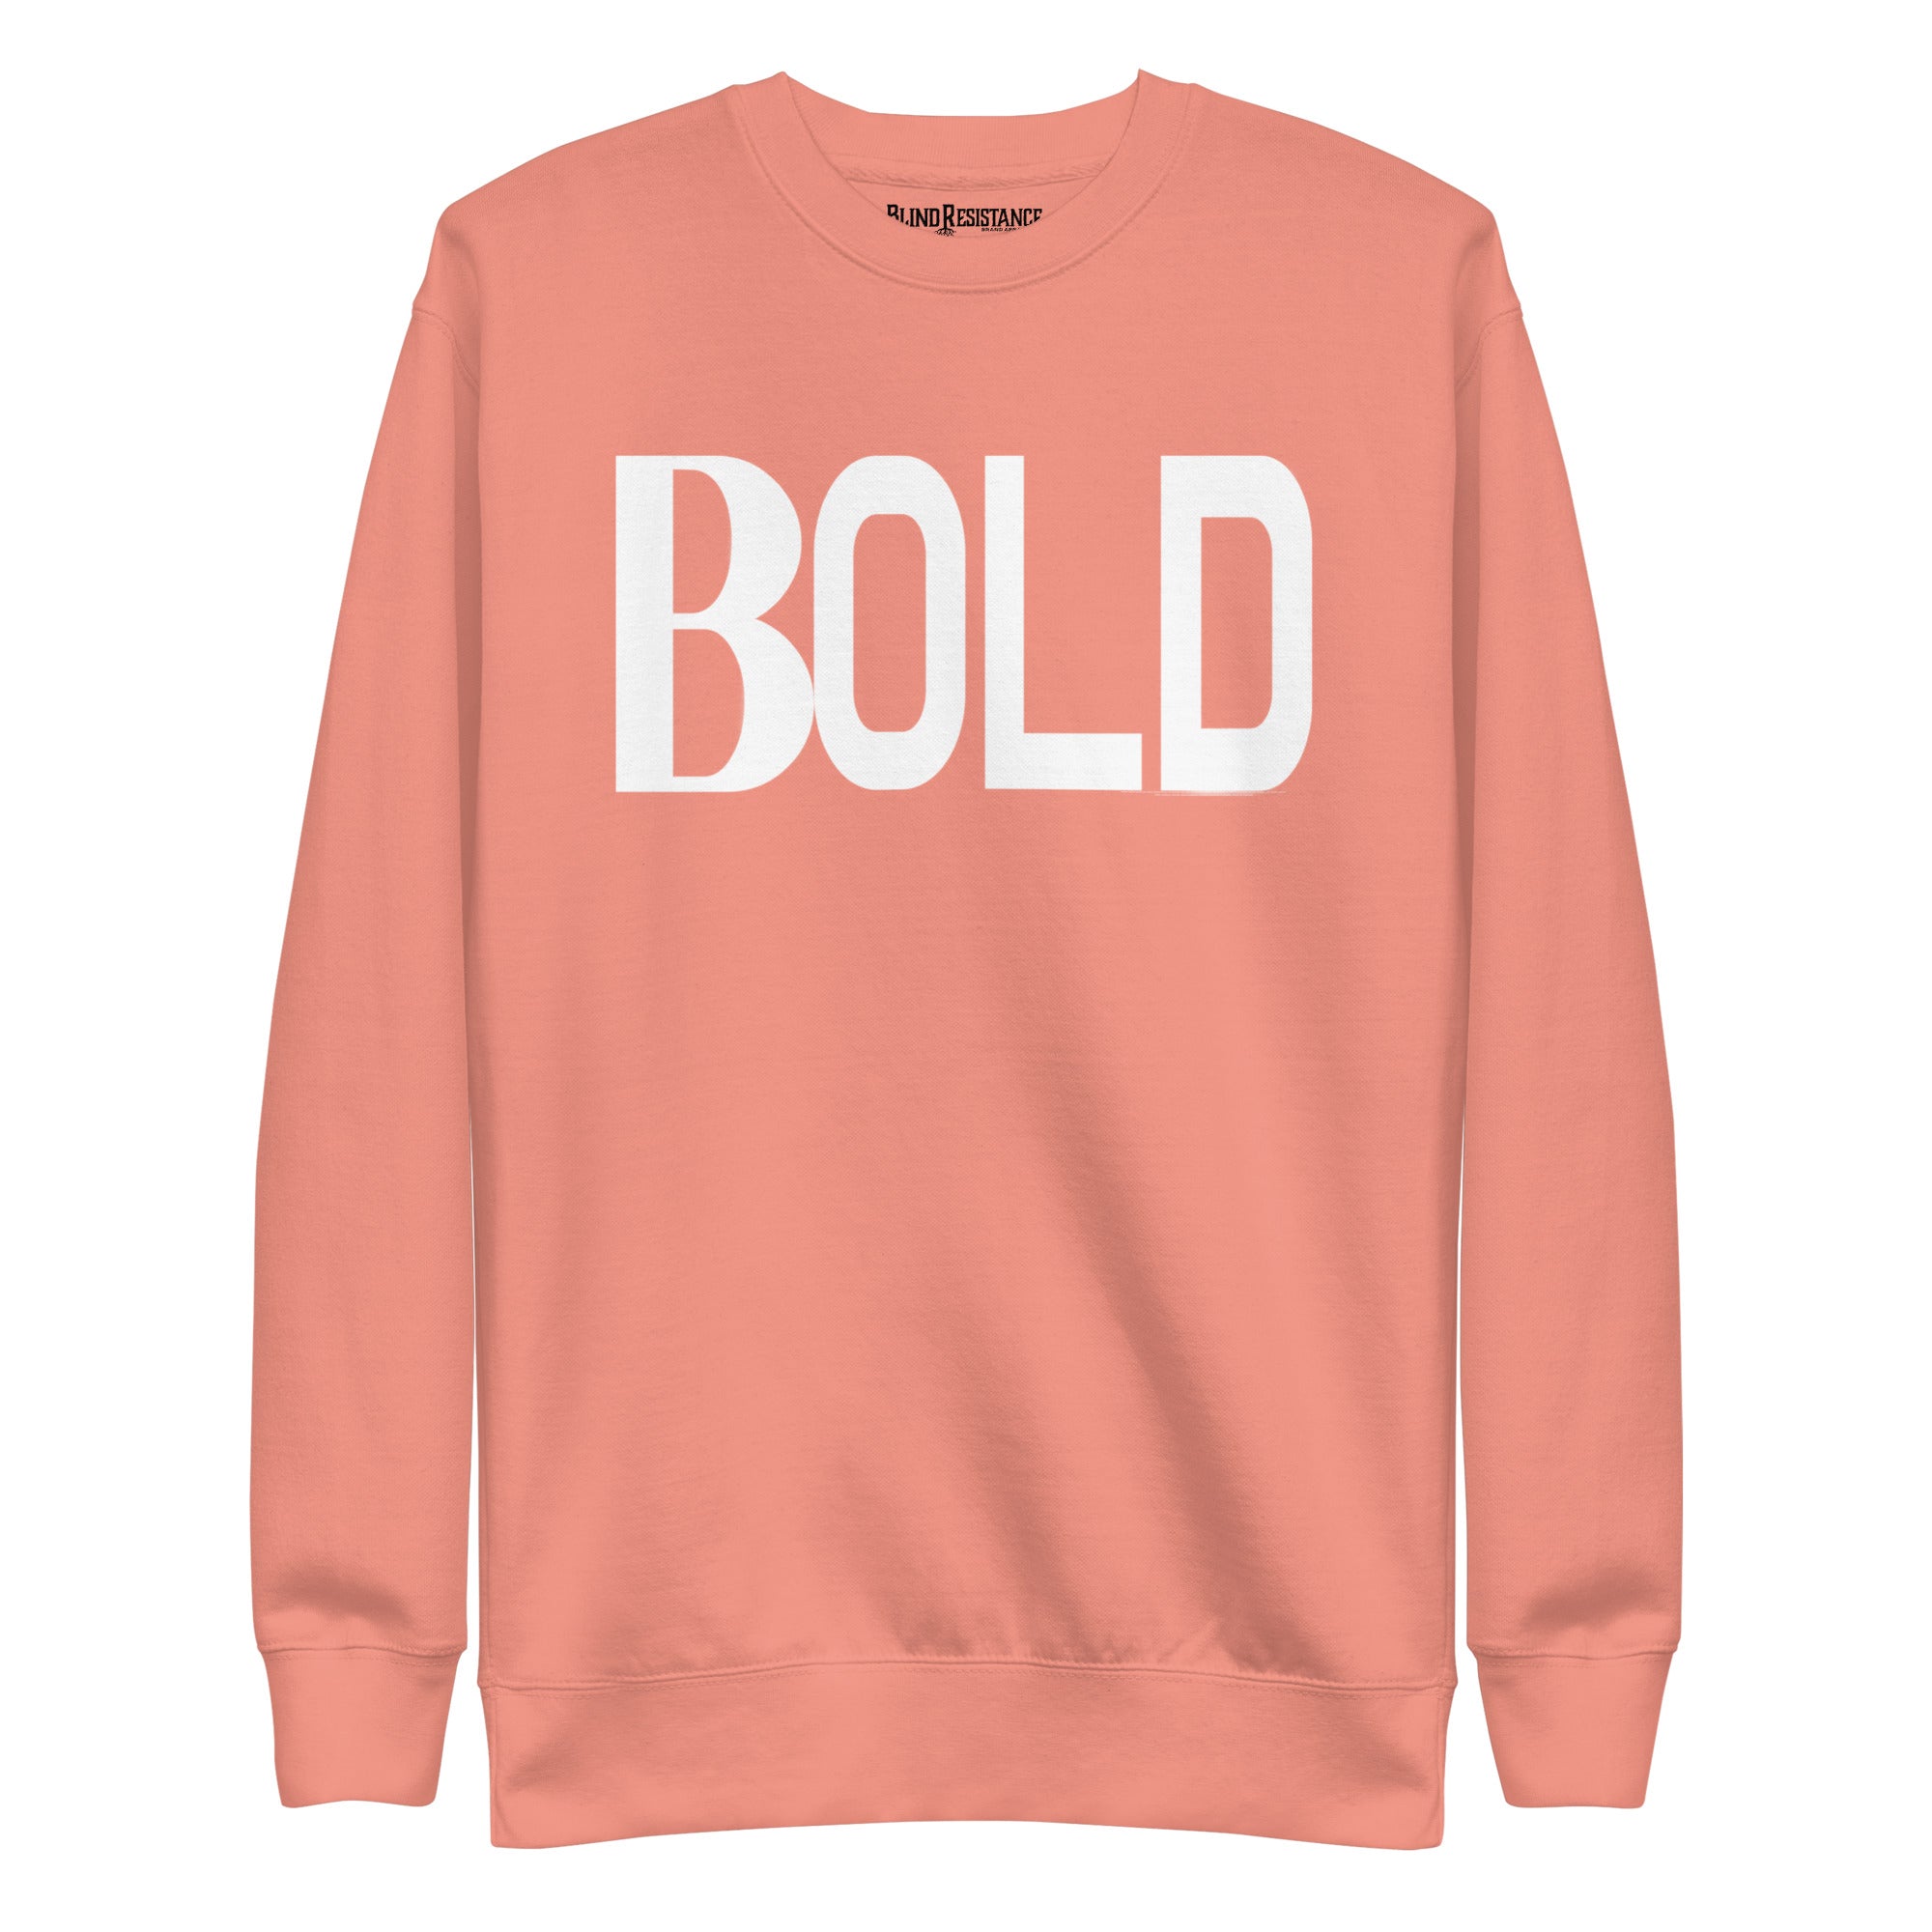 Bold Premium Slim Fit Sweatshirt for Men